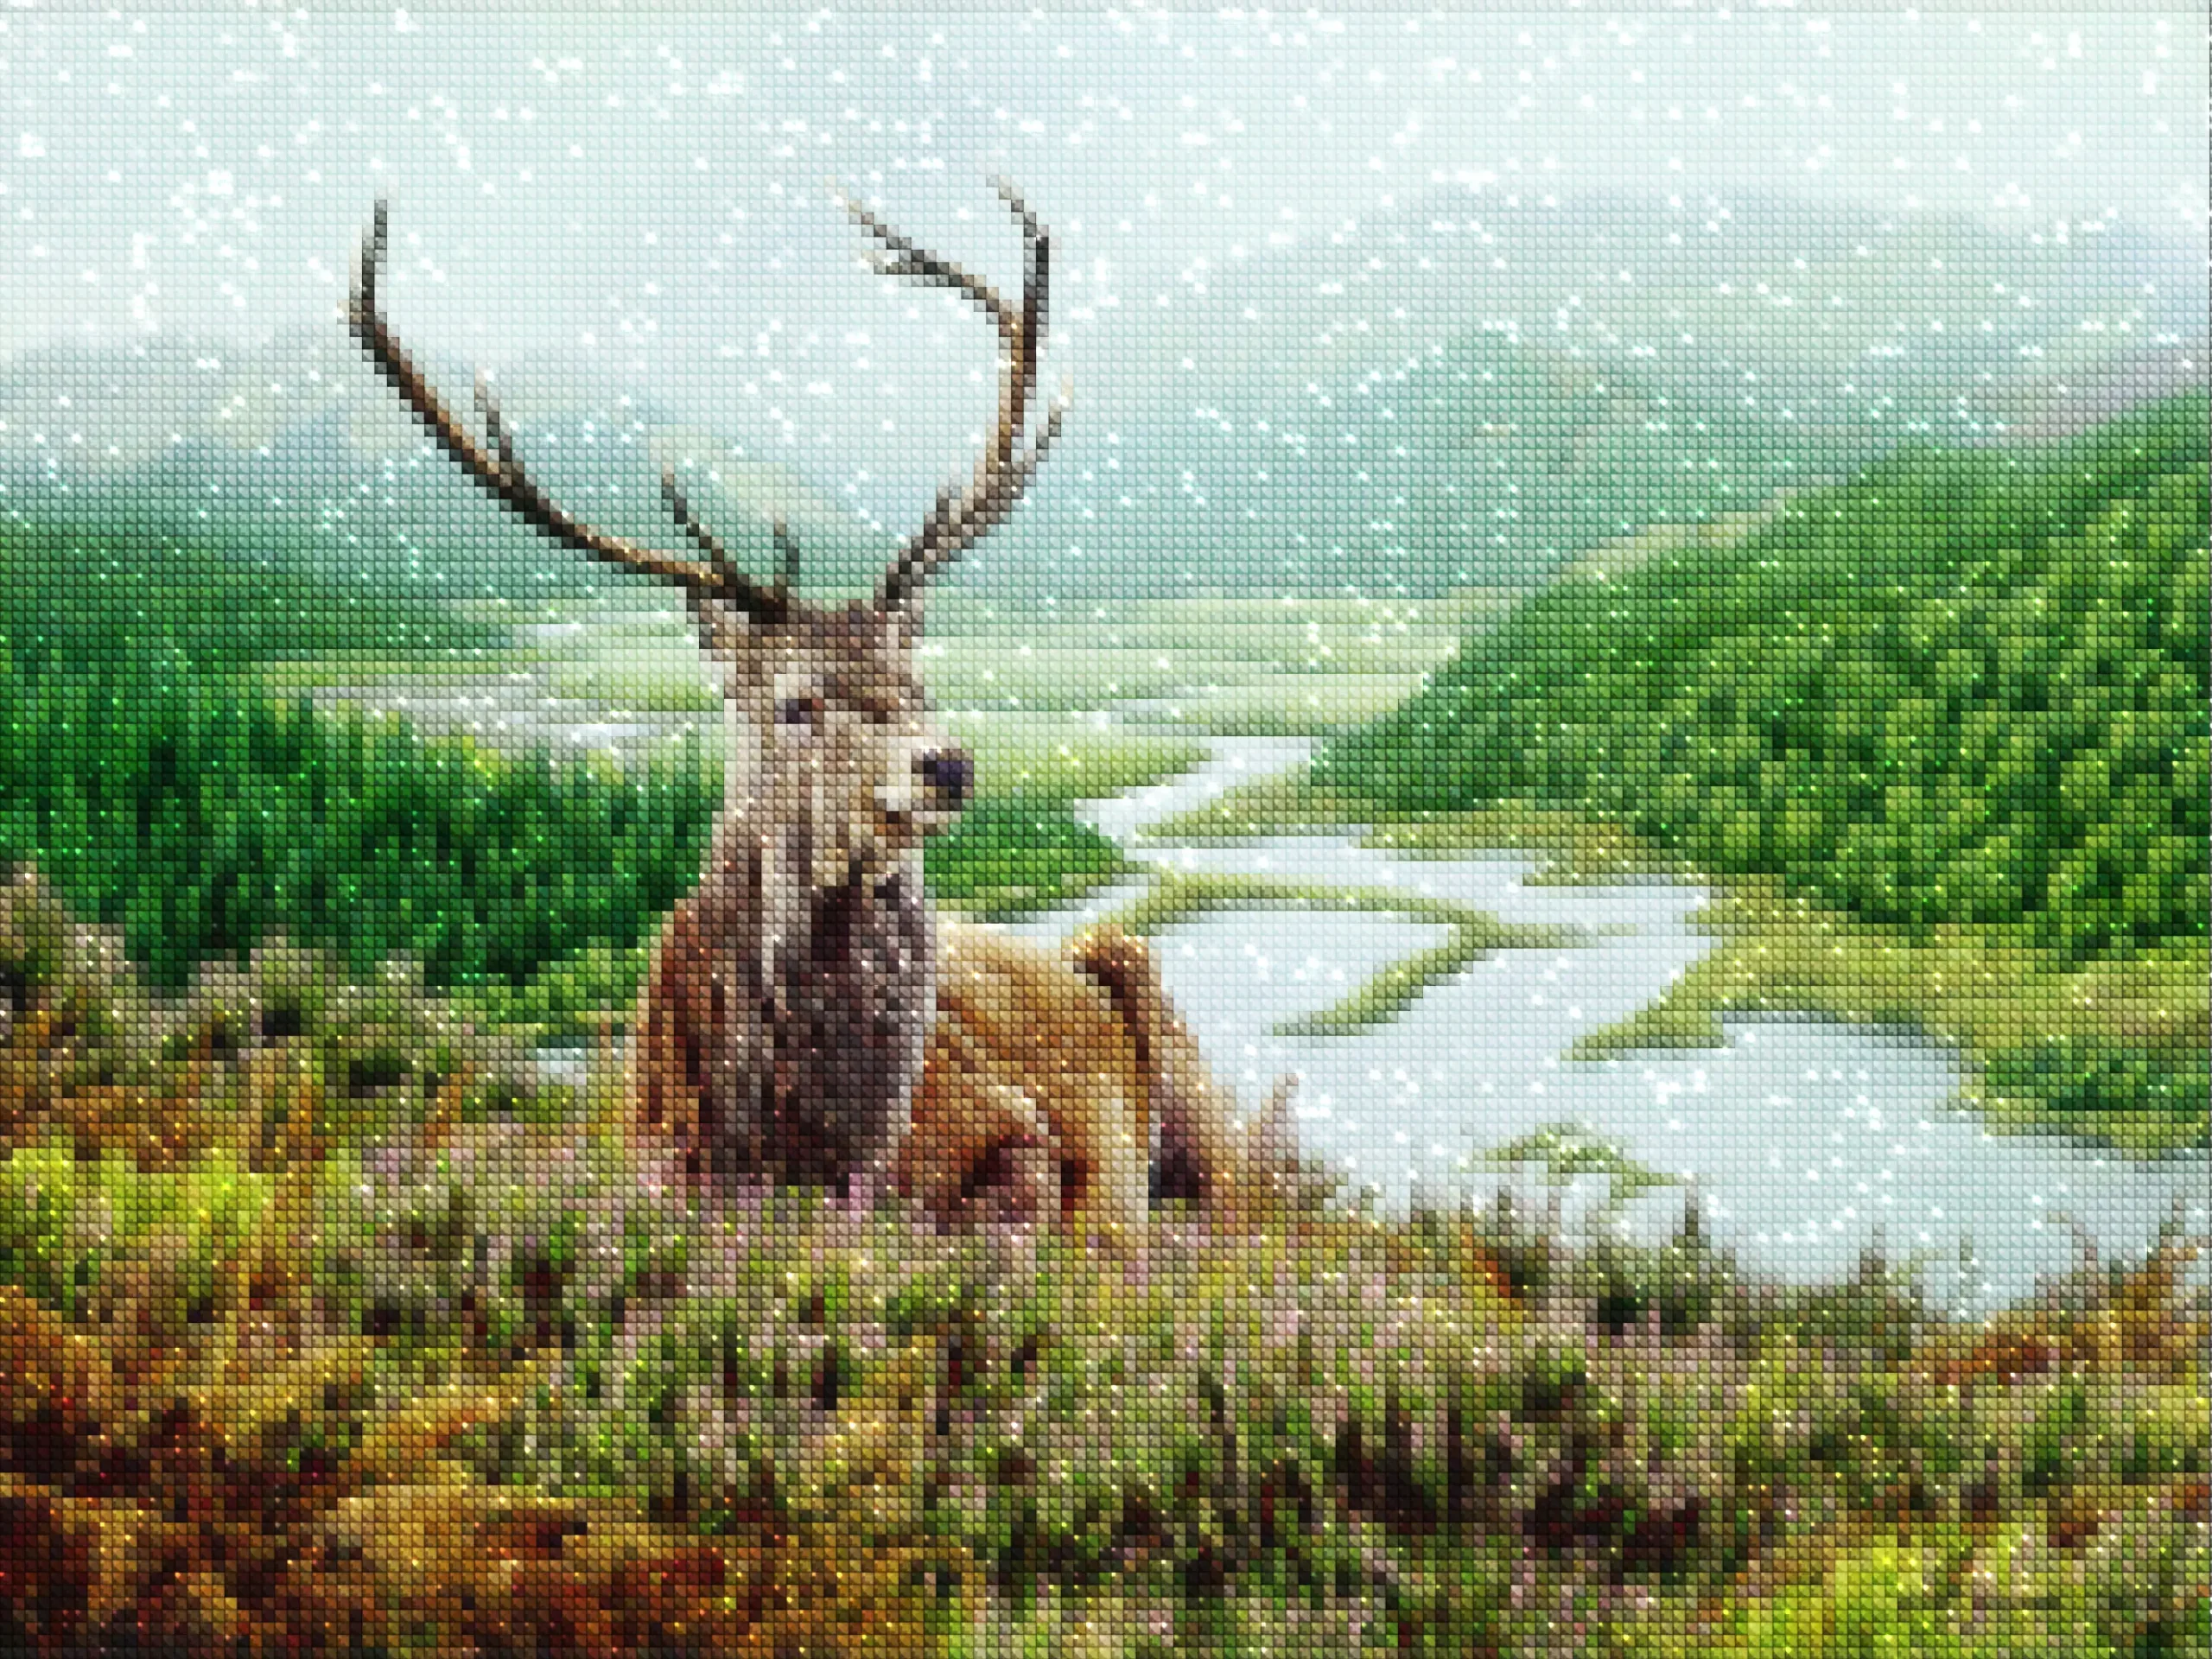 Diamond Painting Wild Deer In The Mountains – Diamonds Wizard